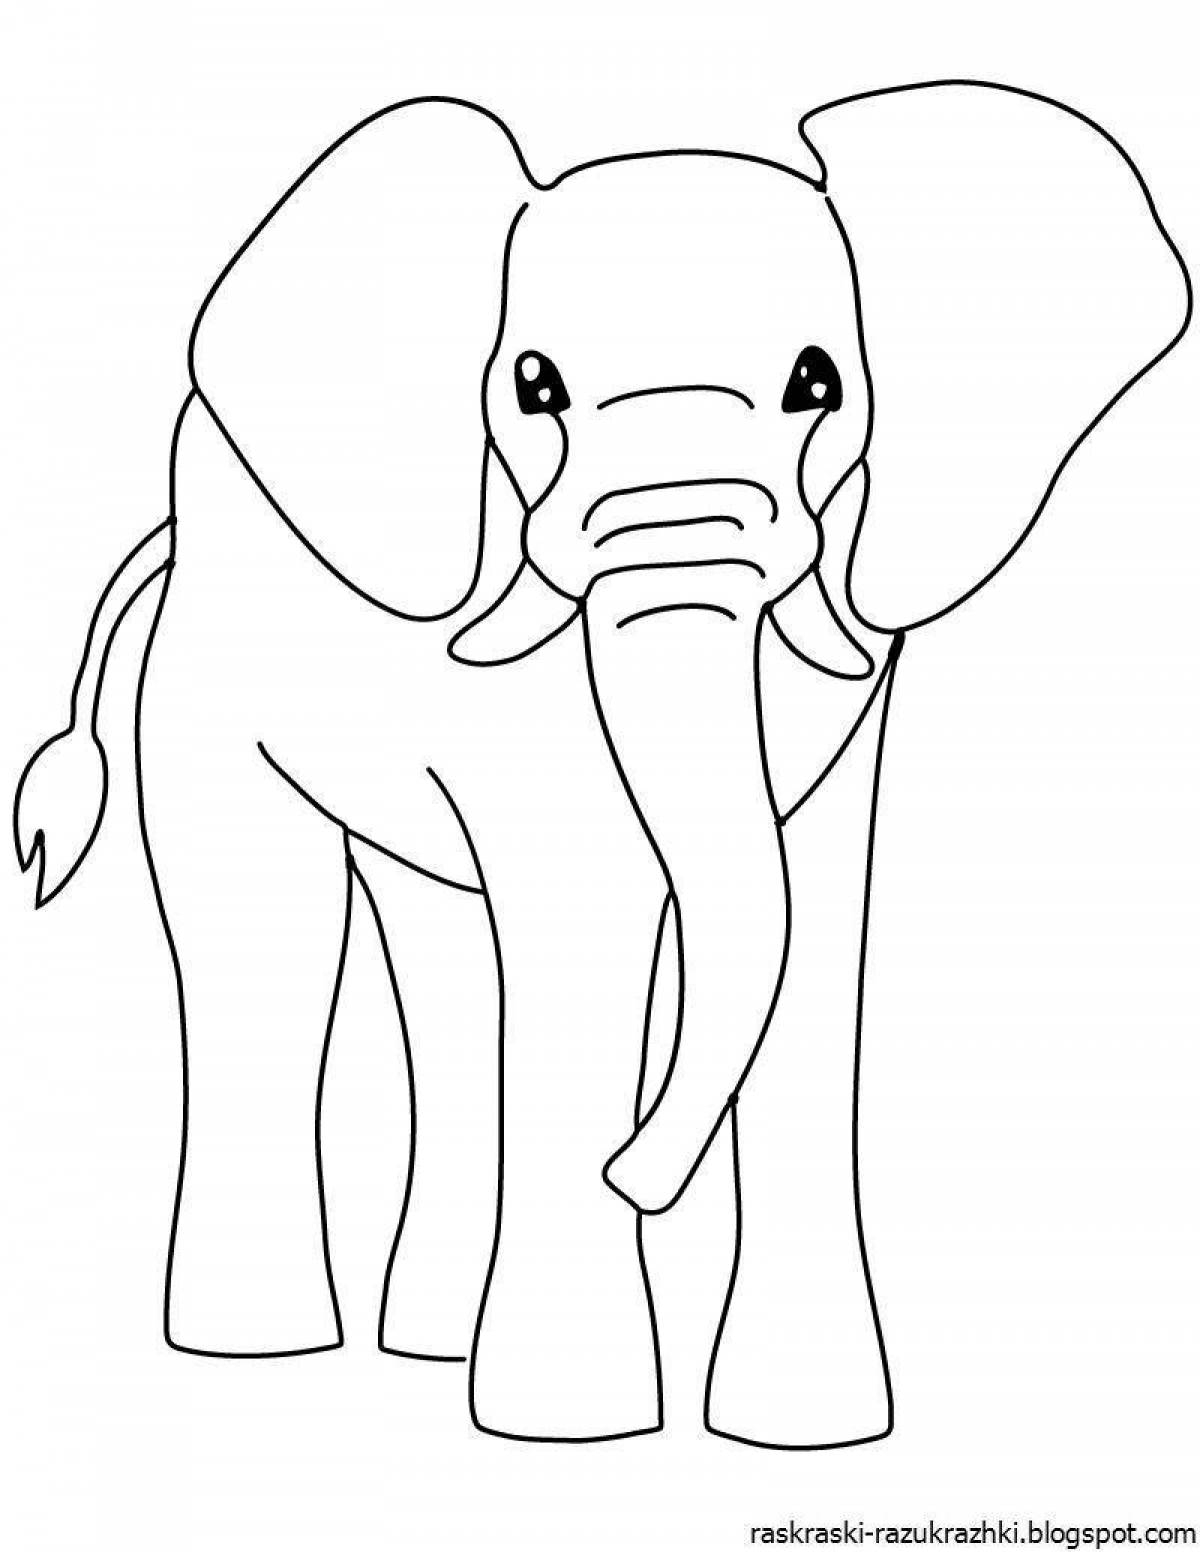 Elegant elephant coloring